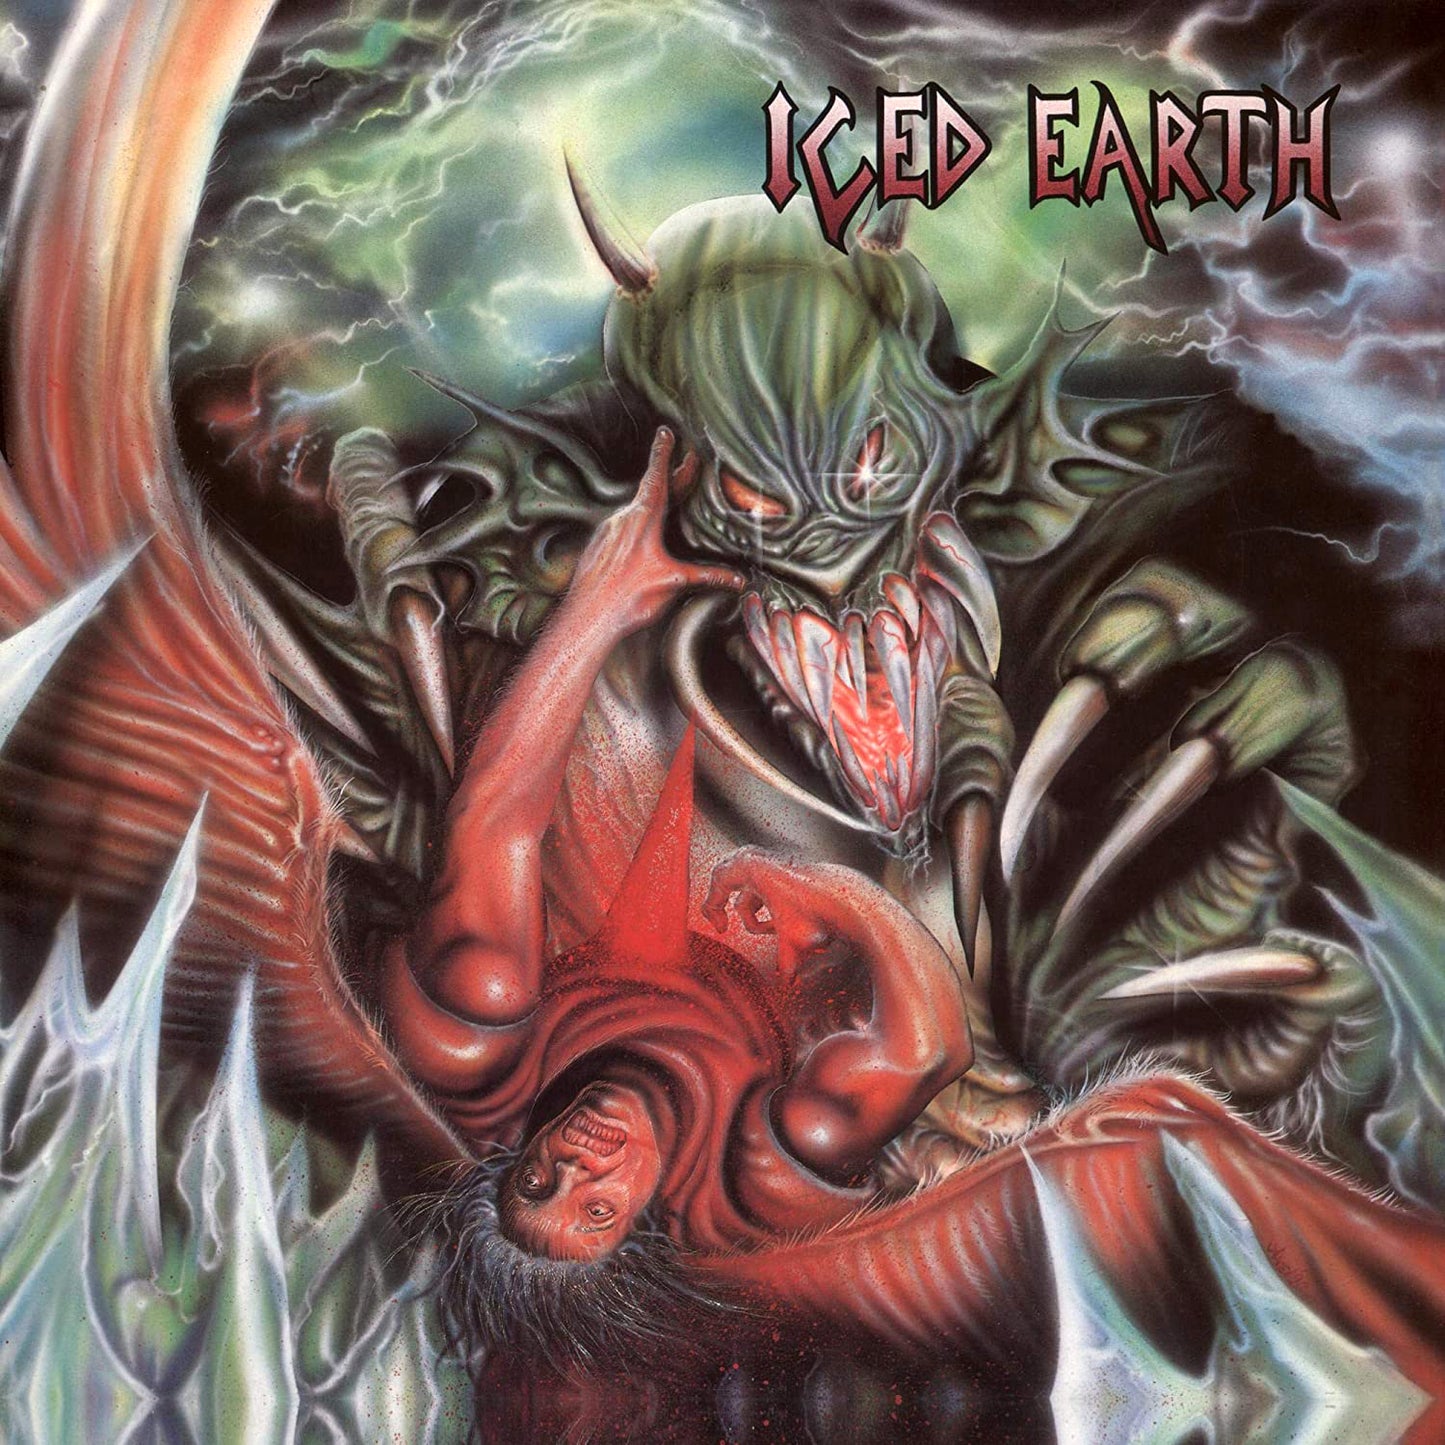 ICED EARTH Iced Earth CD Digipak - 30th Anniversary (Limited Edition)